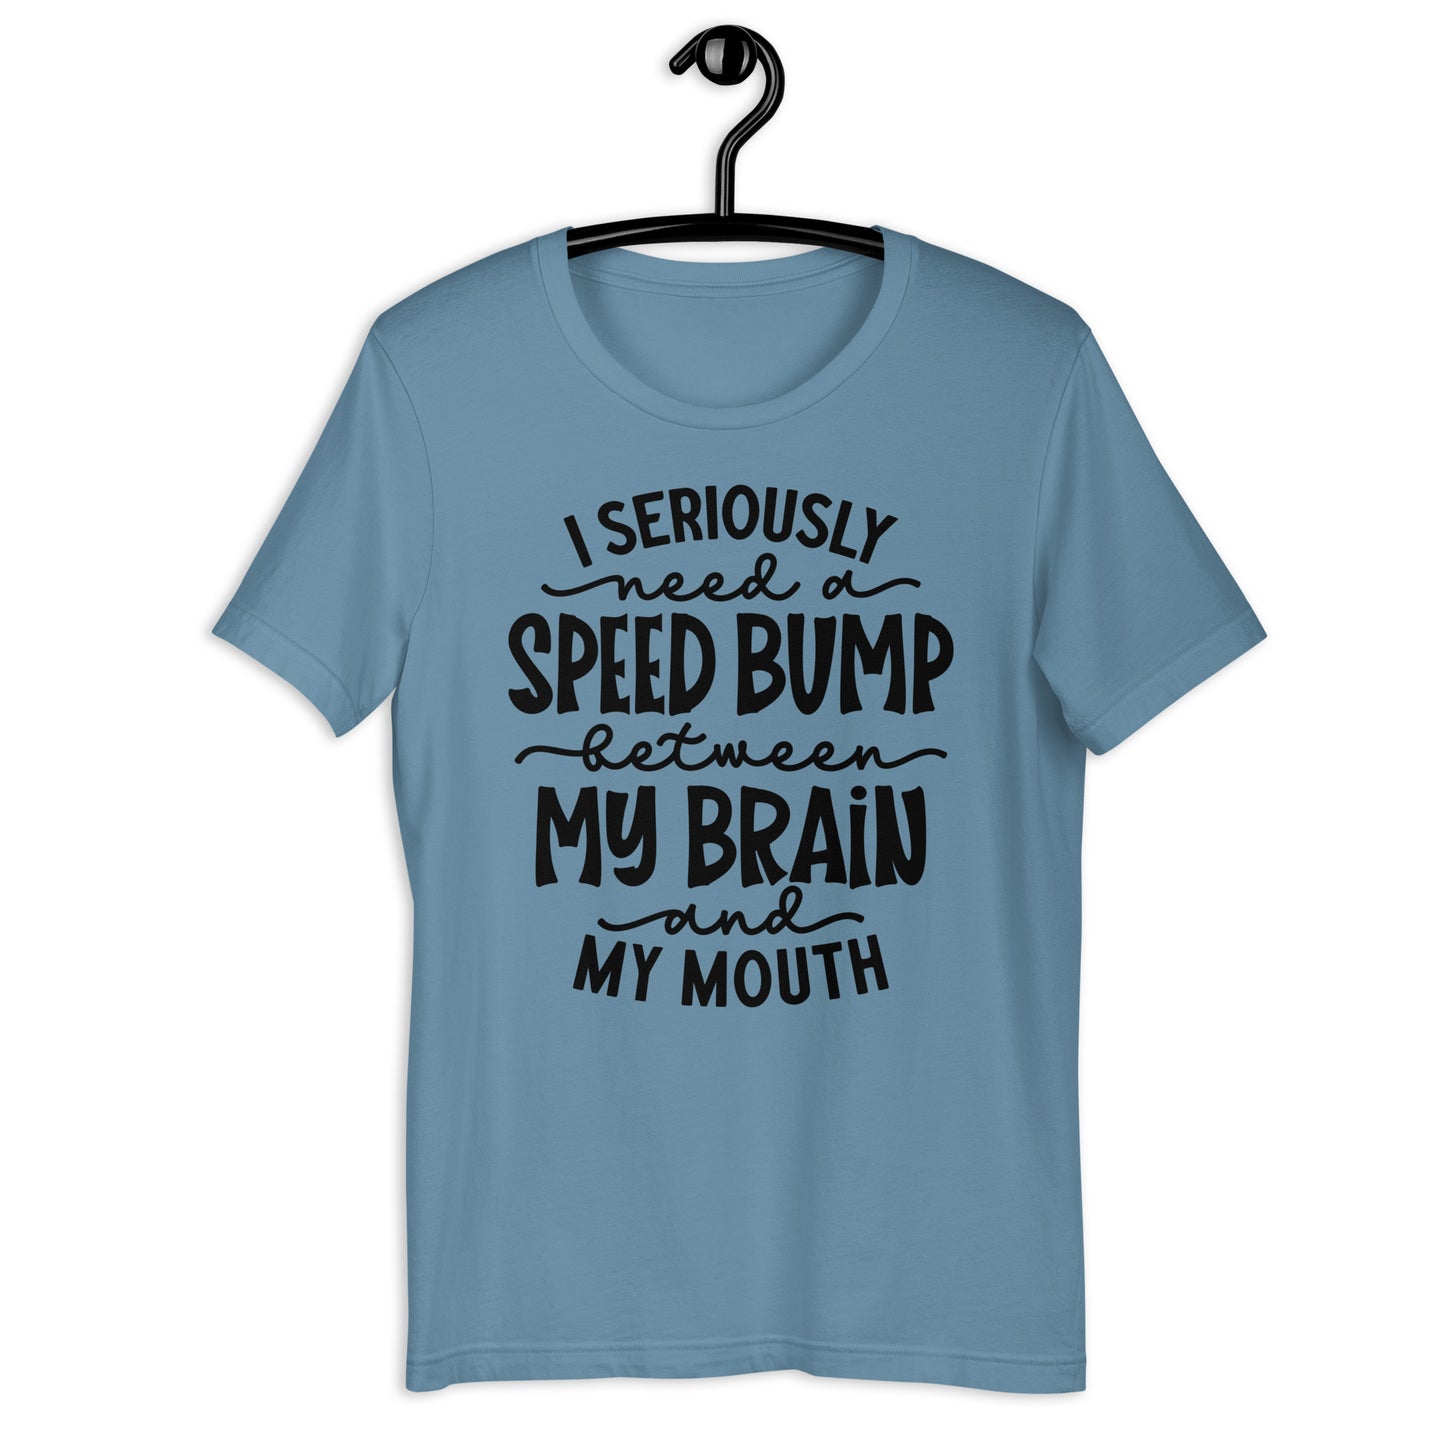 Spontaneity Unleashed: Brain-to-Mouth Speed Bump Shirt